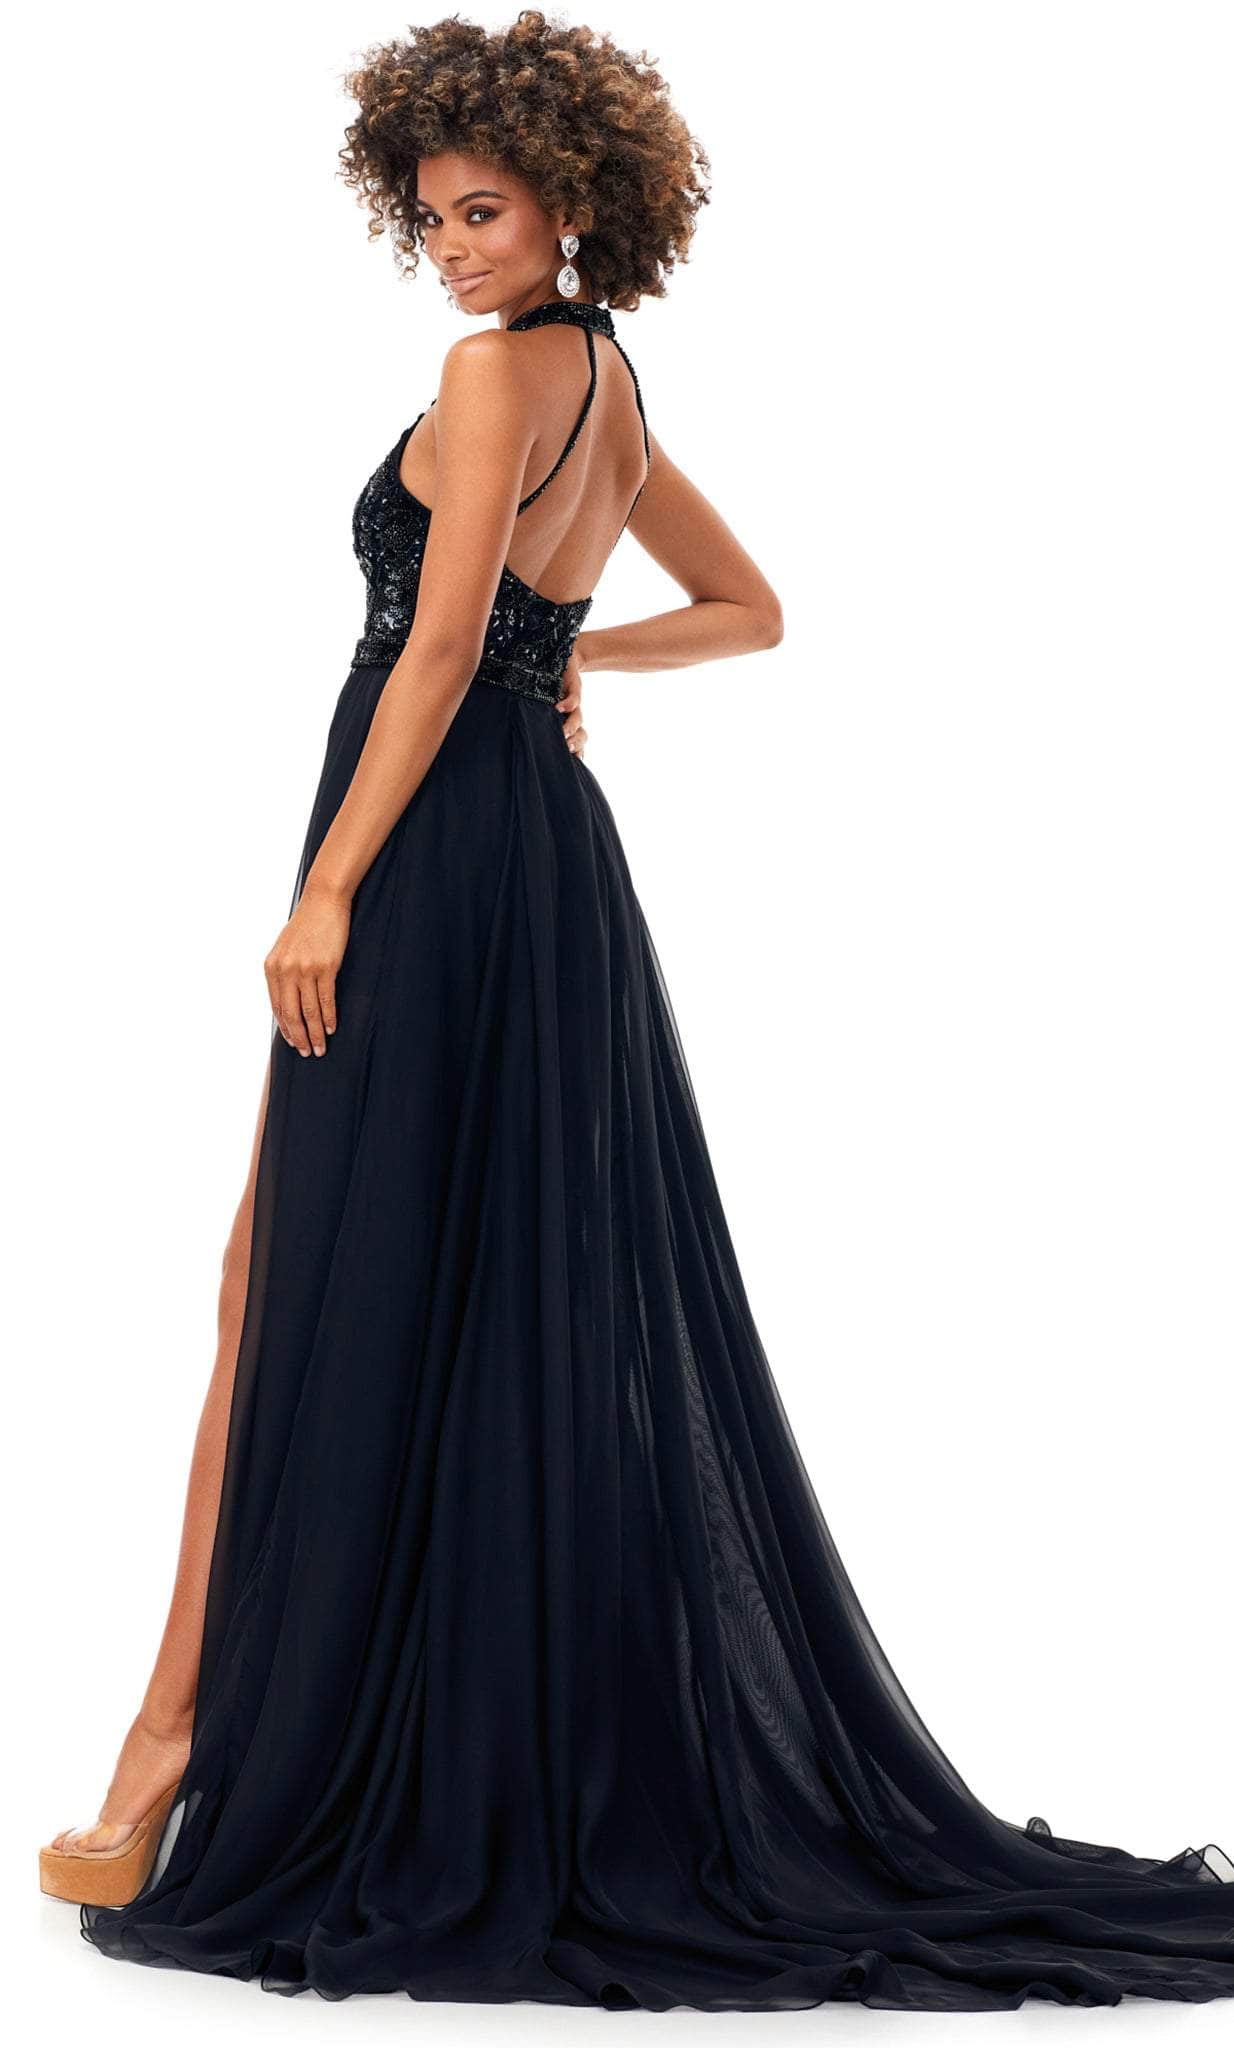 Ashley Lauren 11354 - Beaded Halter Romper With Overskirt Special Occasion Dress